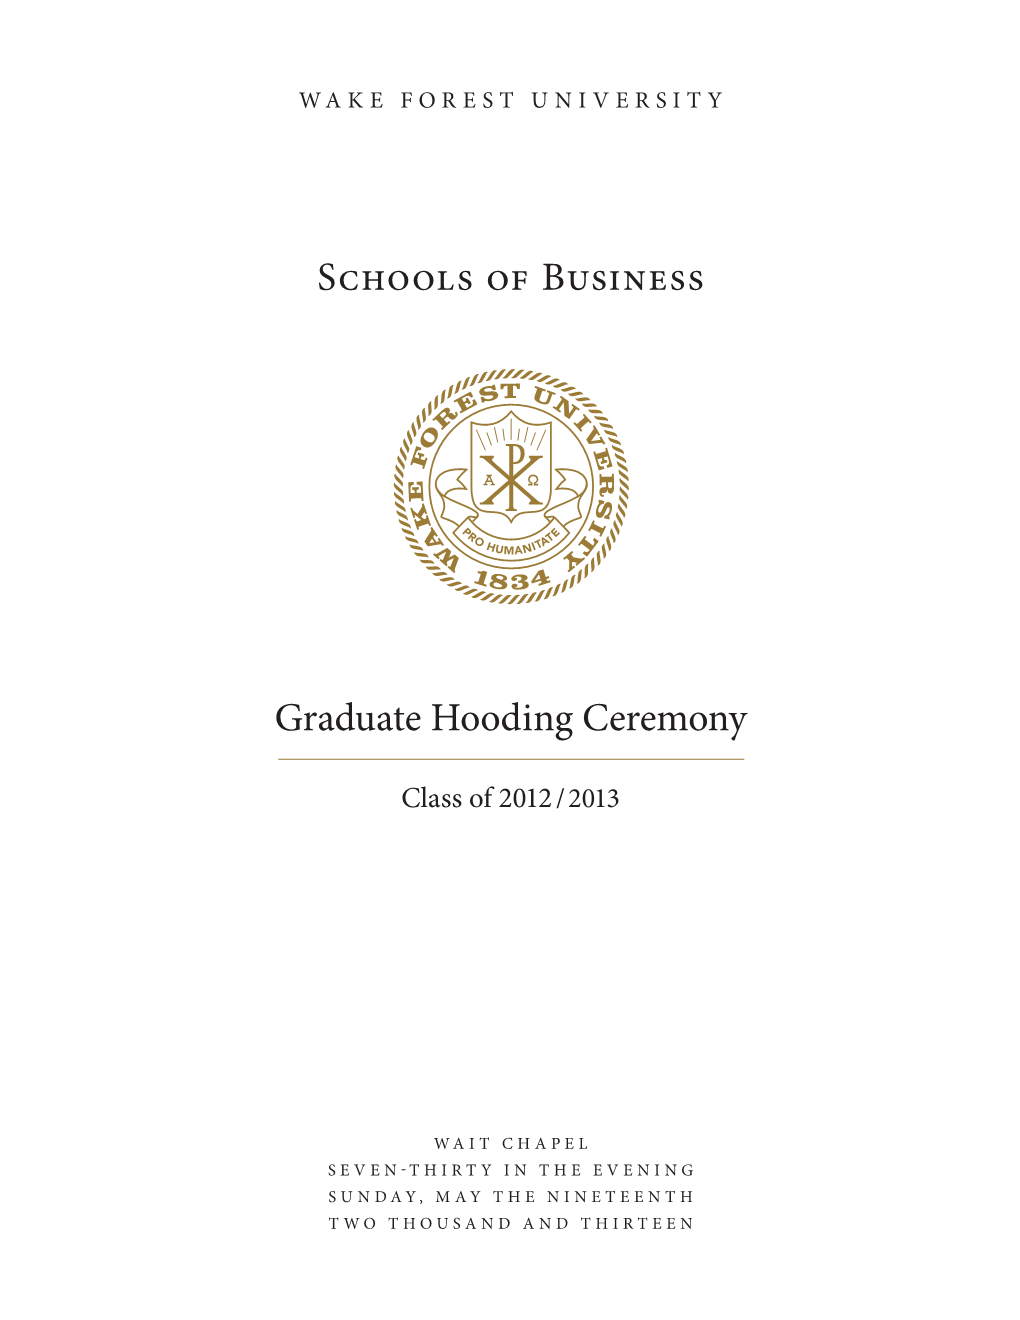 Graduate Hooding Ceremony Schools of Business